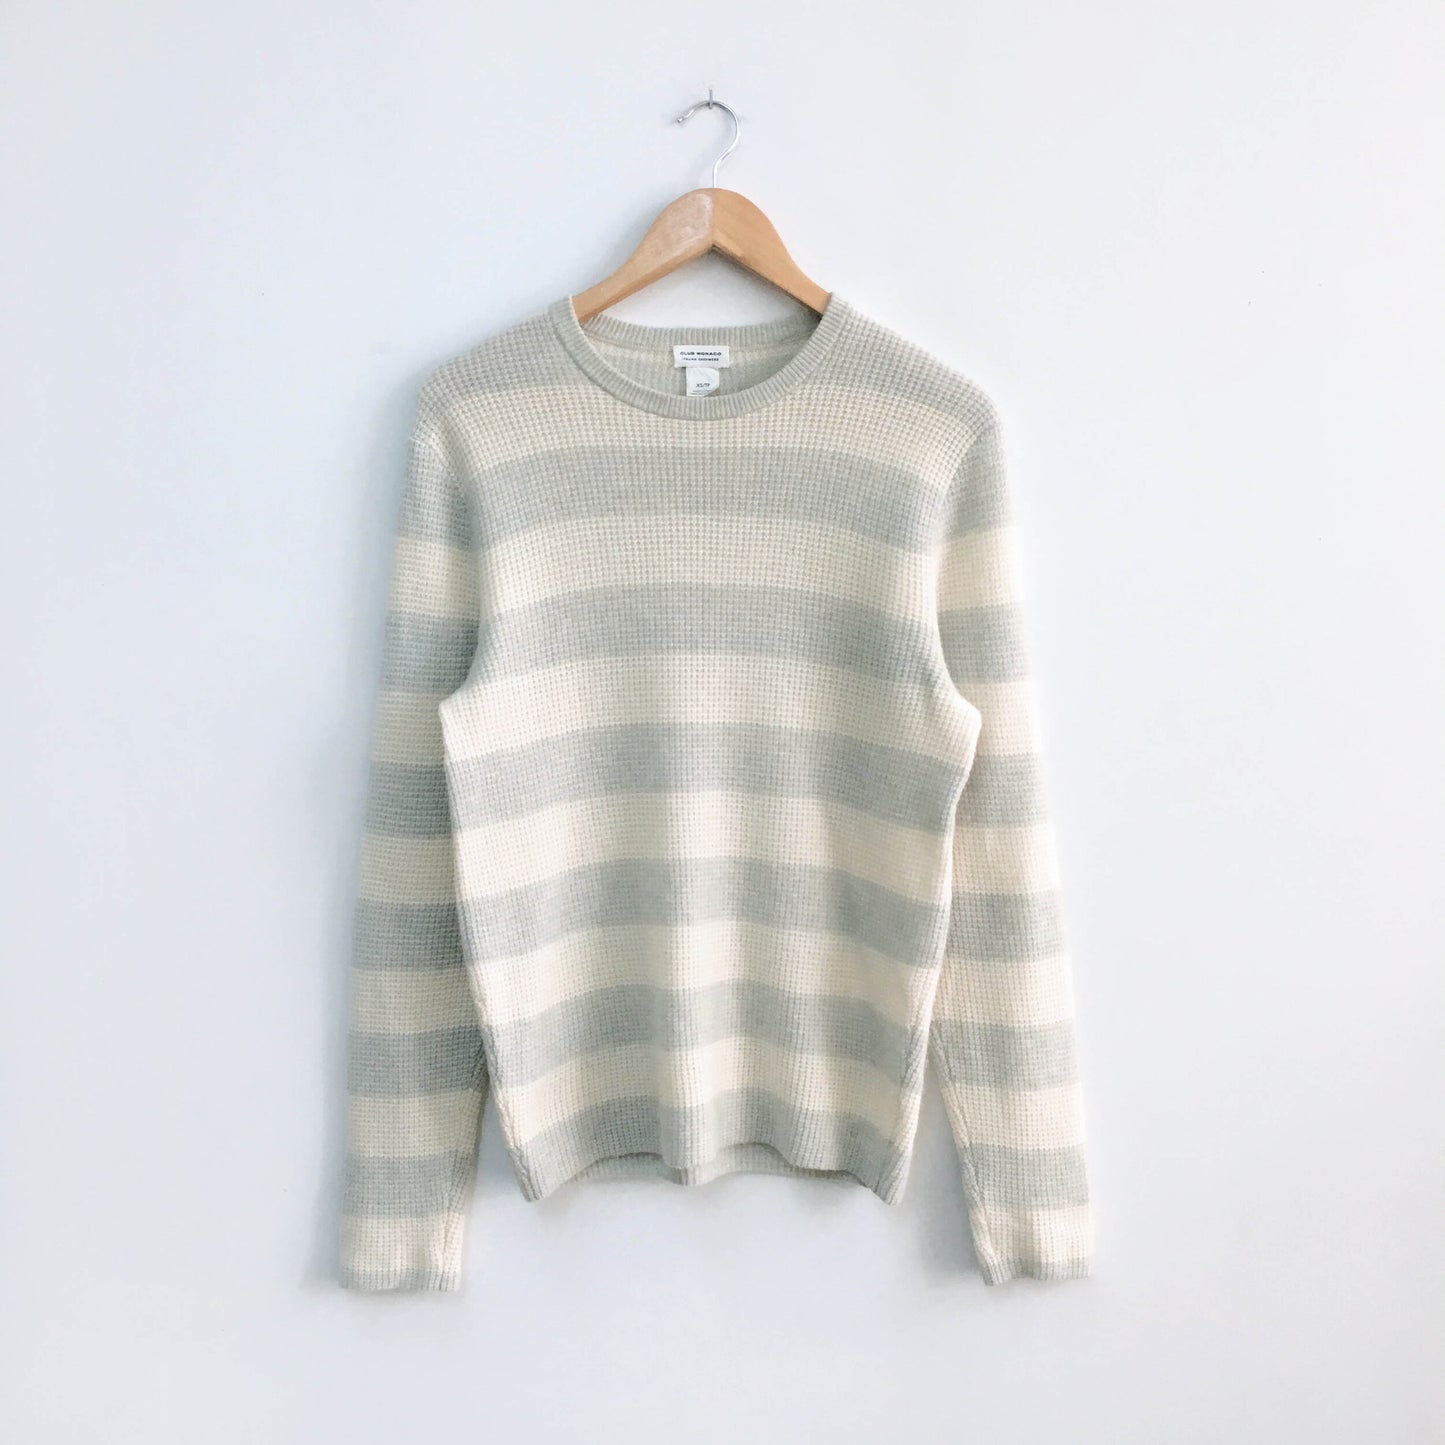 Club Monaco 100% Cashmere Sweater - size xs